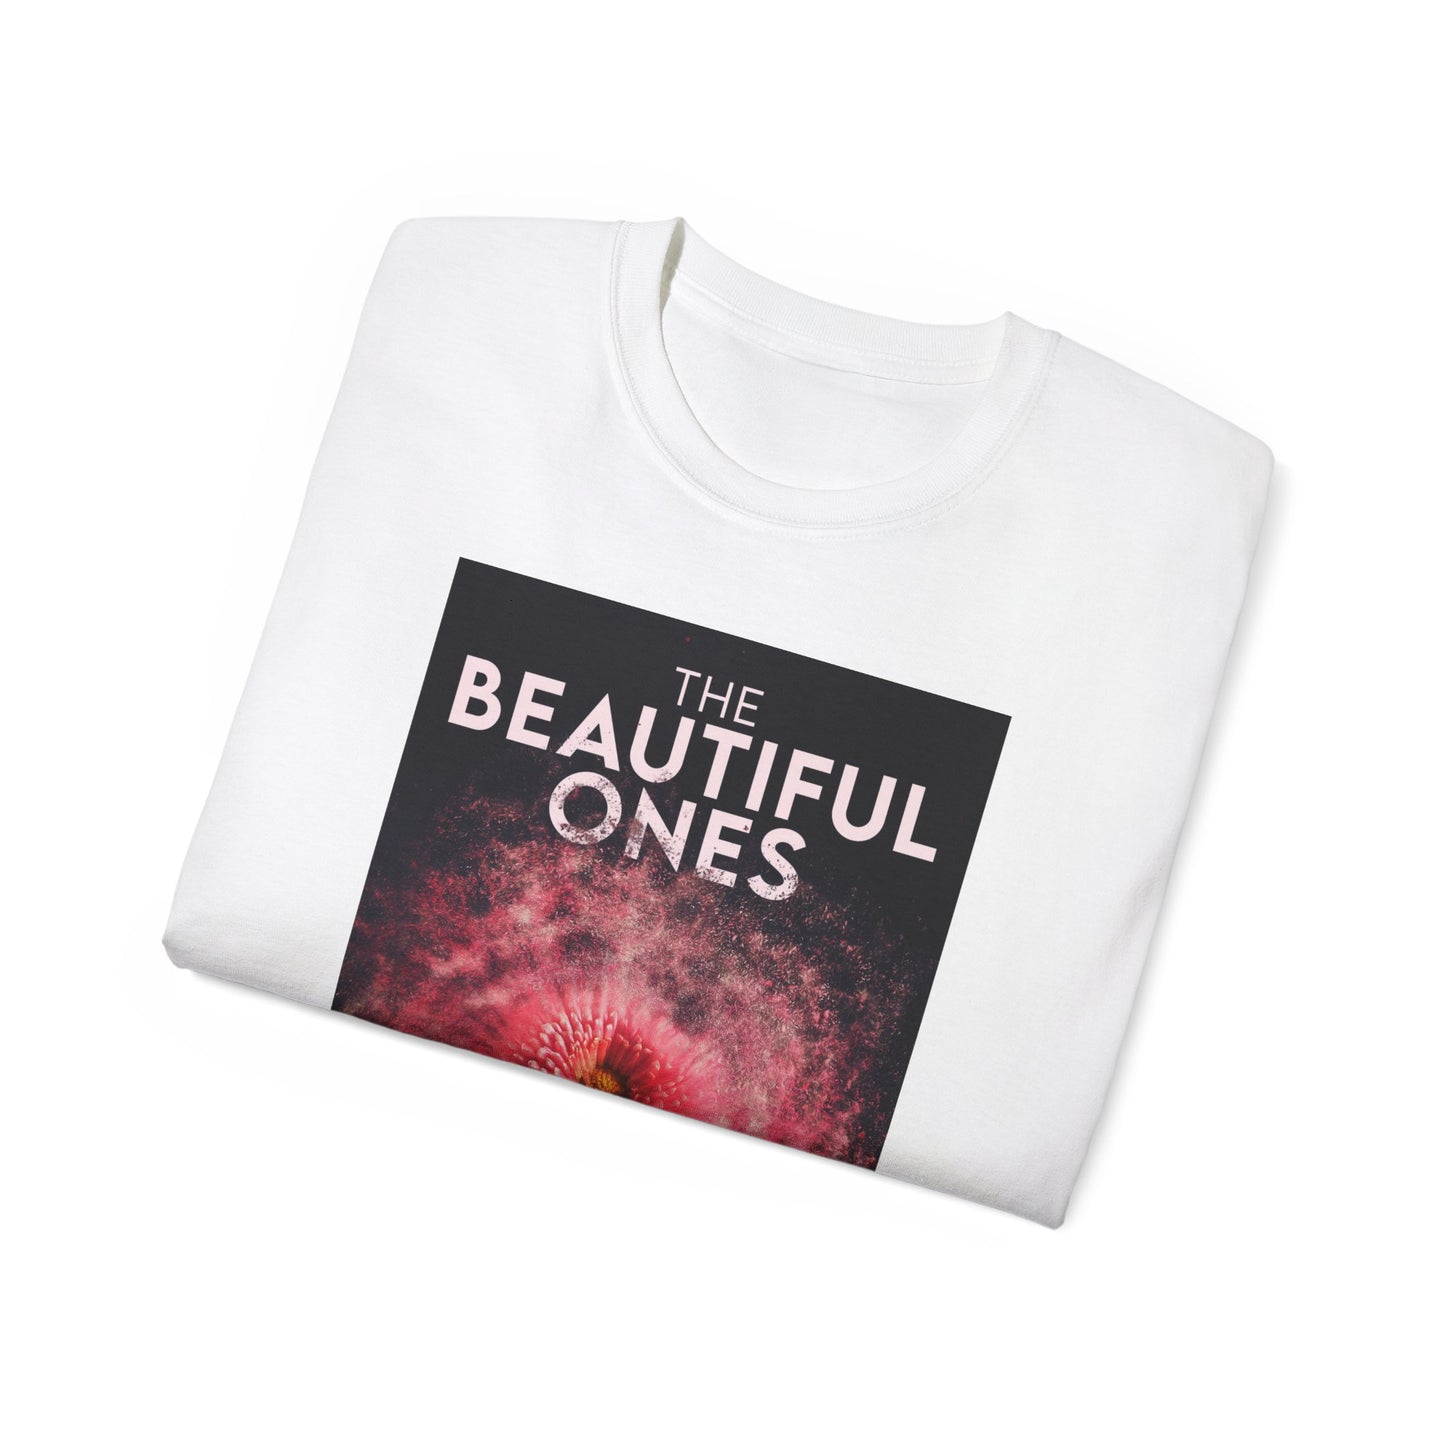 The Beautiful Ones - Unisex T-Shirt